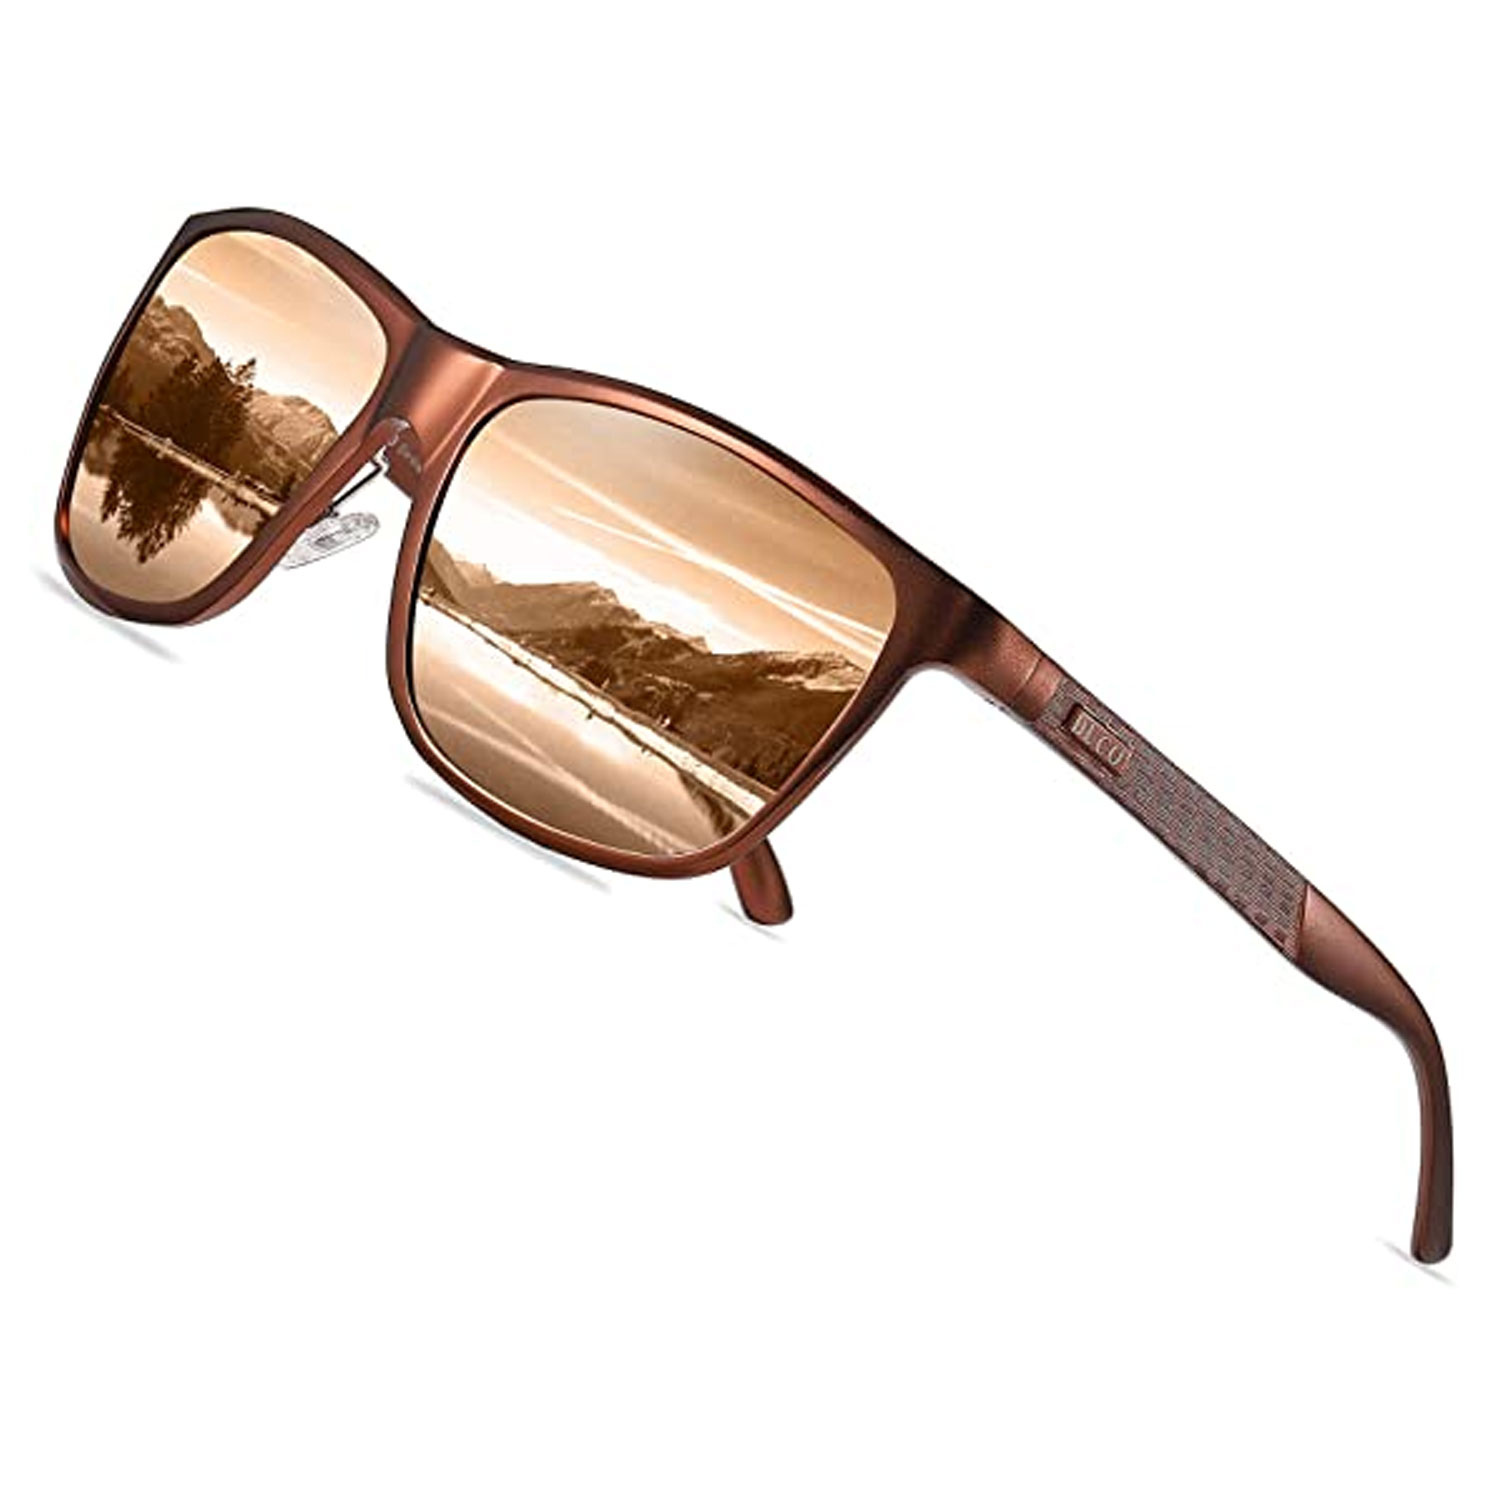 Duco Men's Sports Polarized Al Mg Metal Frame Sunglasses